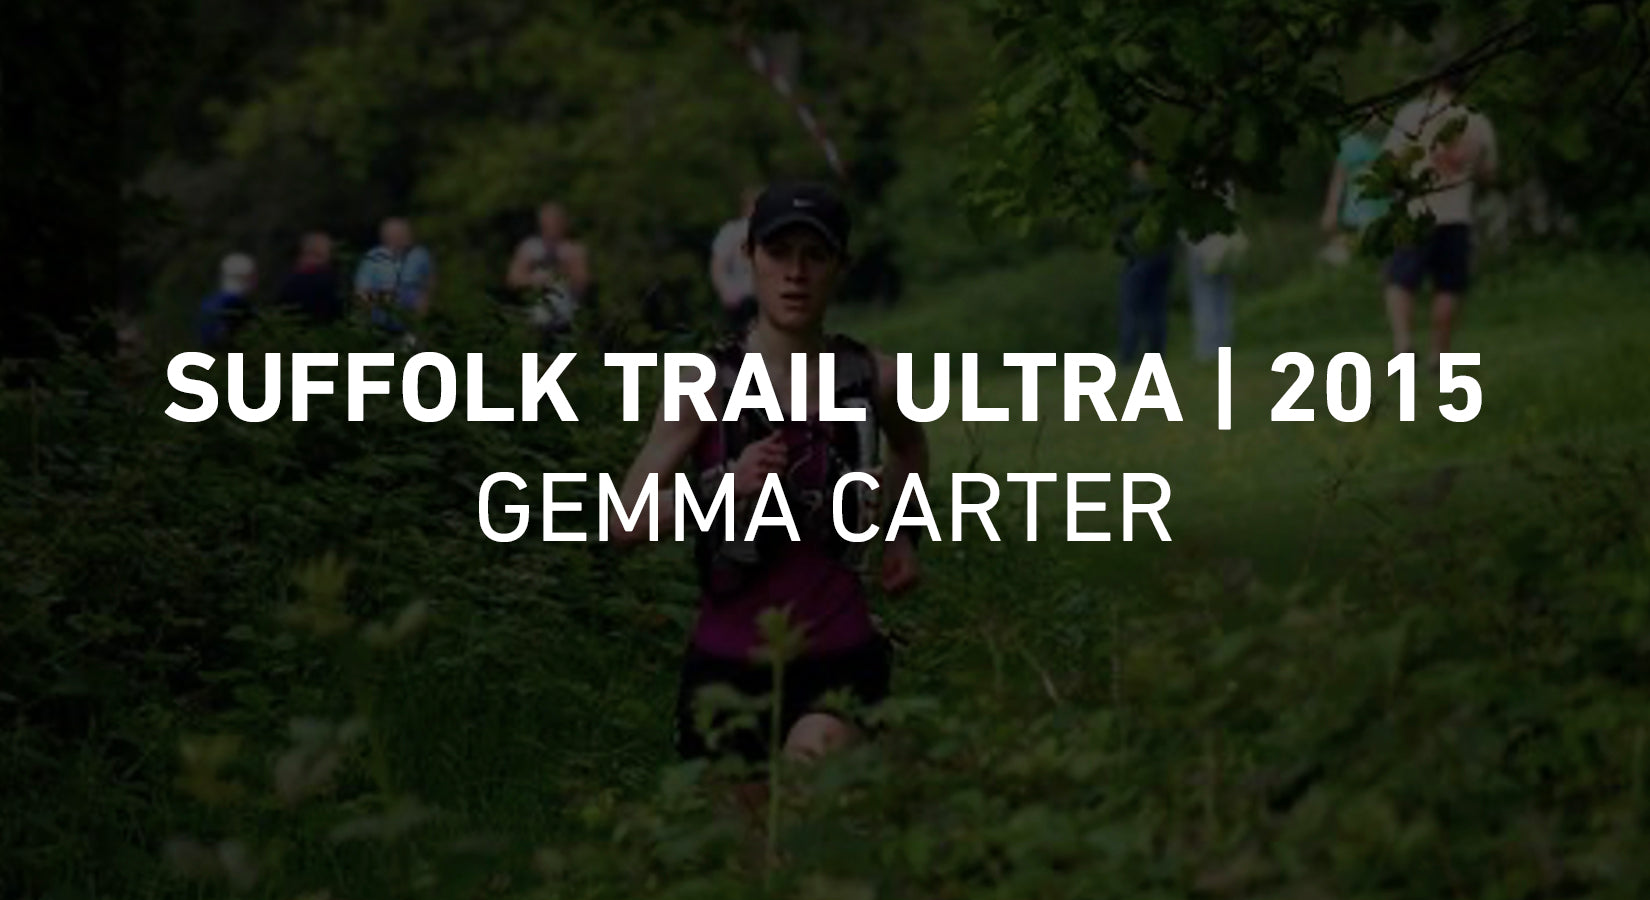 Suffolk Trail Ultra 2015 - Gemma Carter - 2015